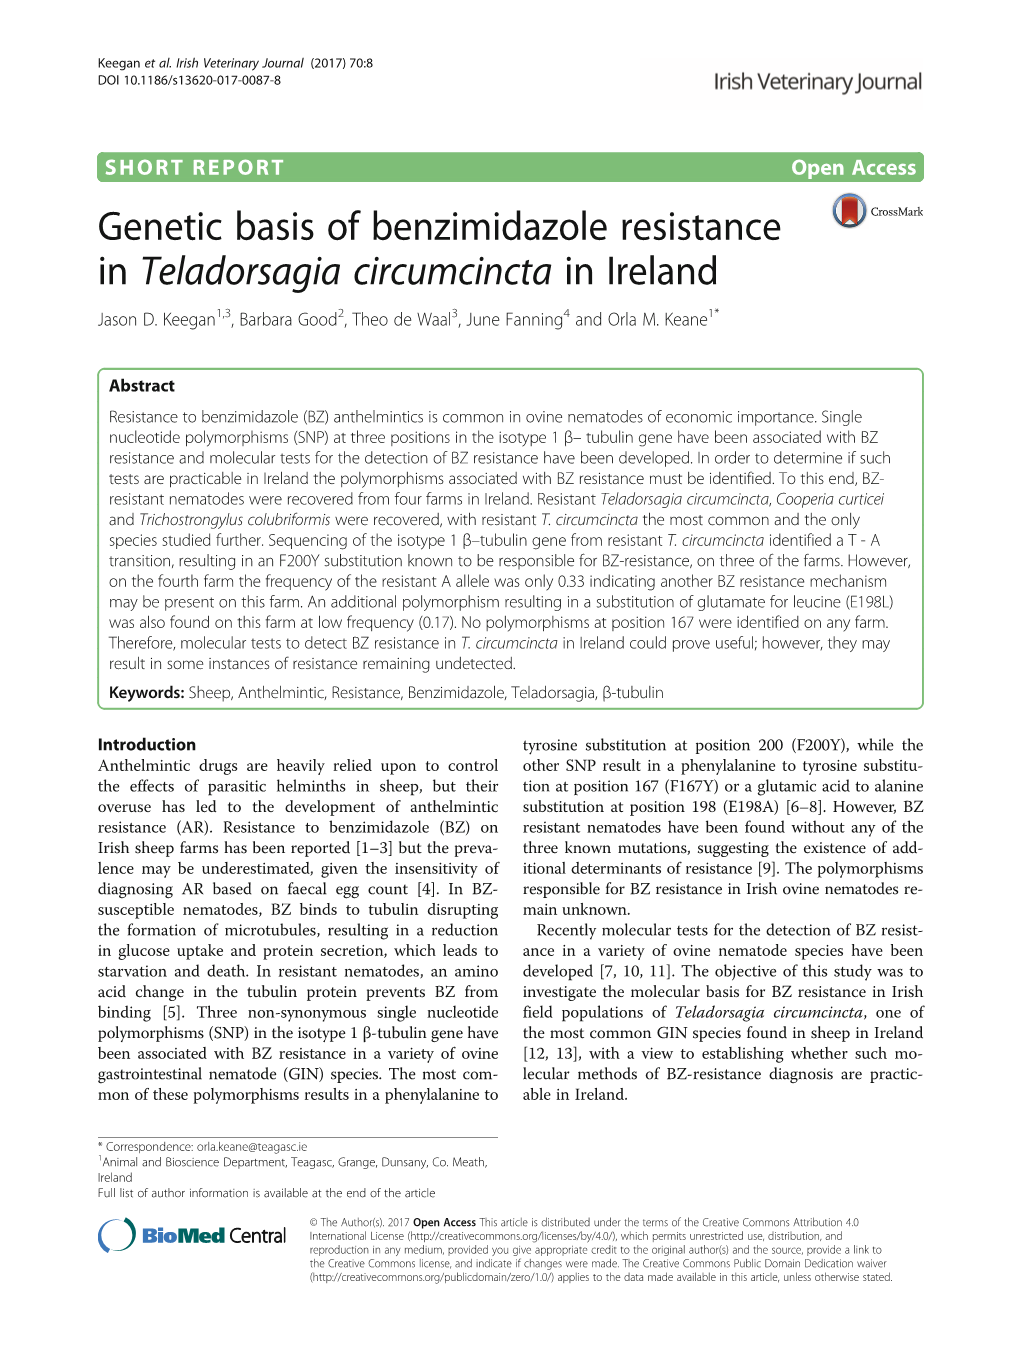 Genetic Basis of Benzimidazole Resistance in Teladorsagia Circumcincta in Ireland Jason D